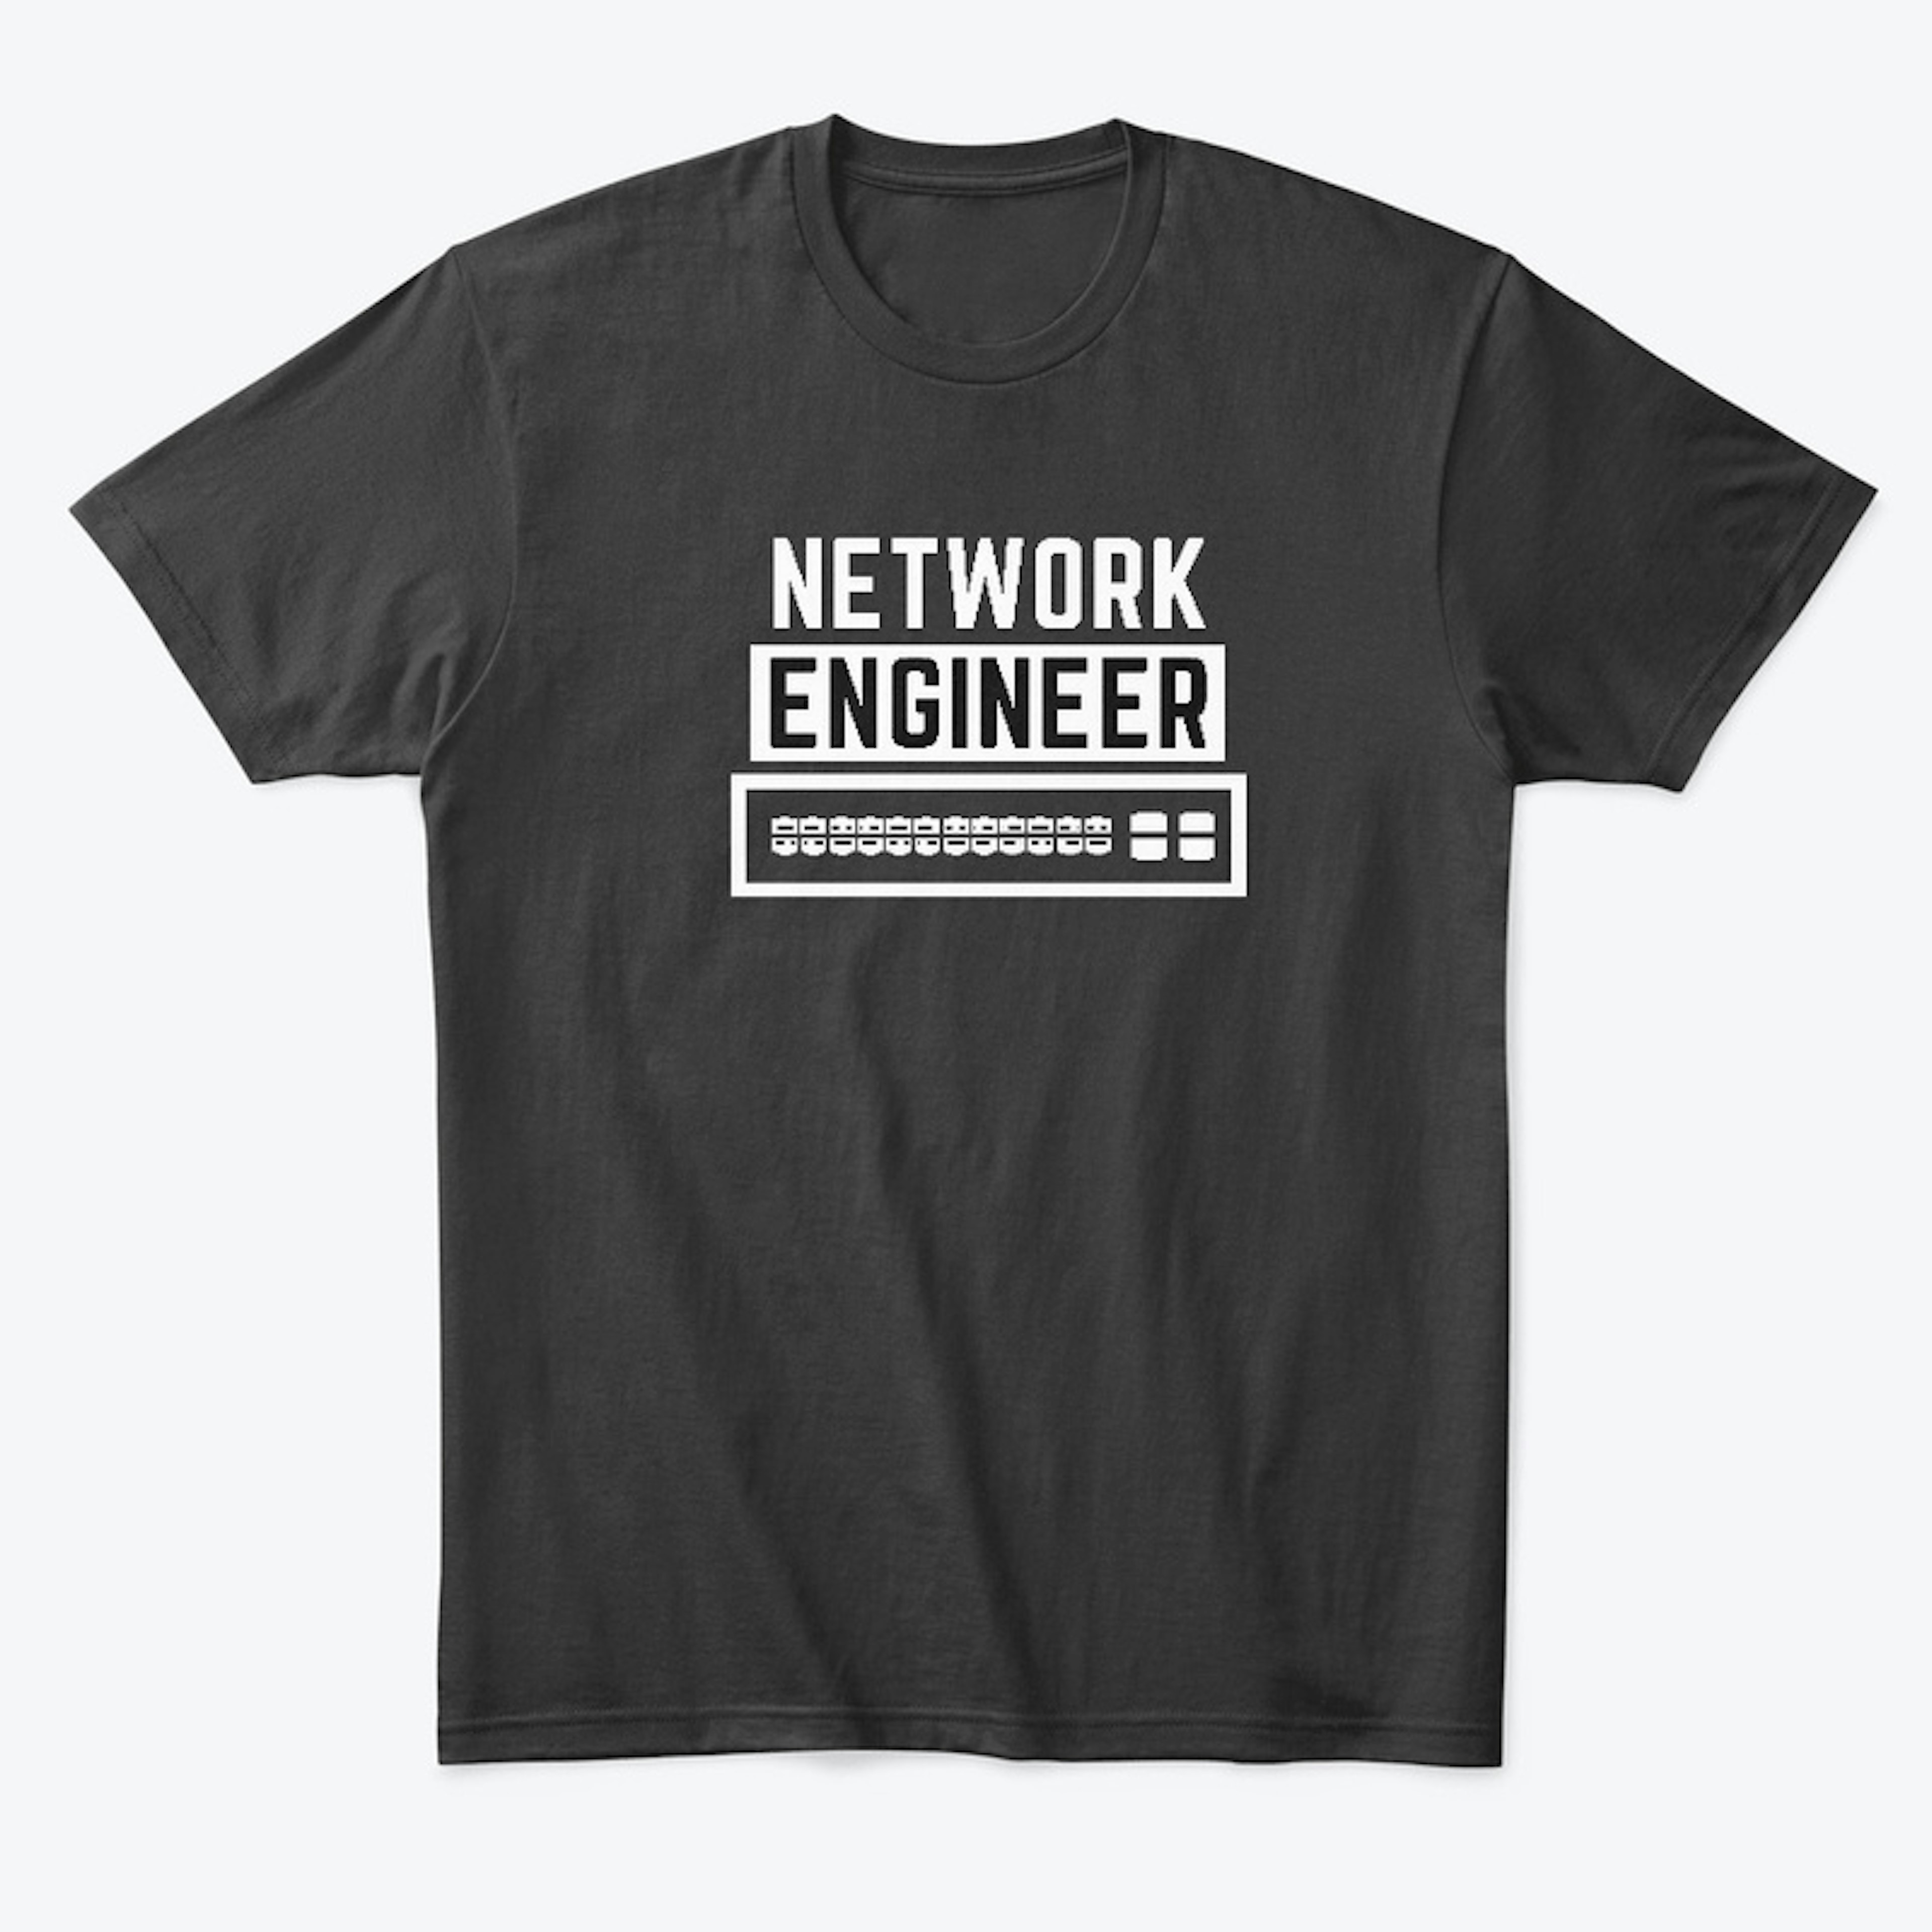 Network Engineer I Got 99 Problems